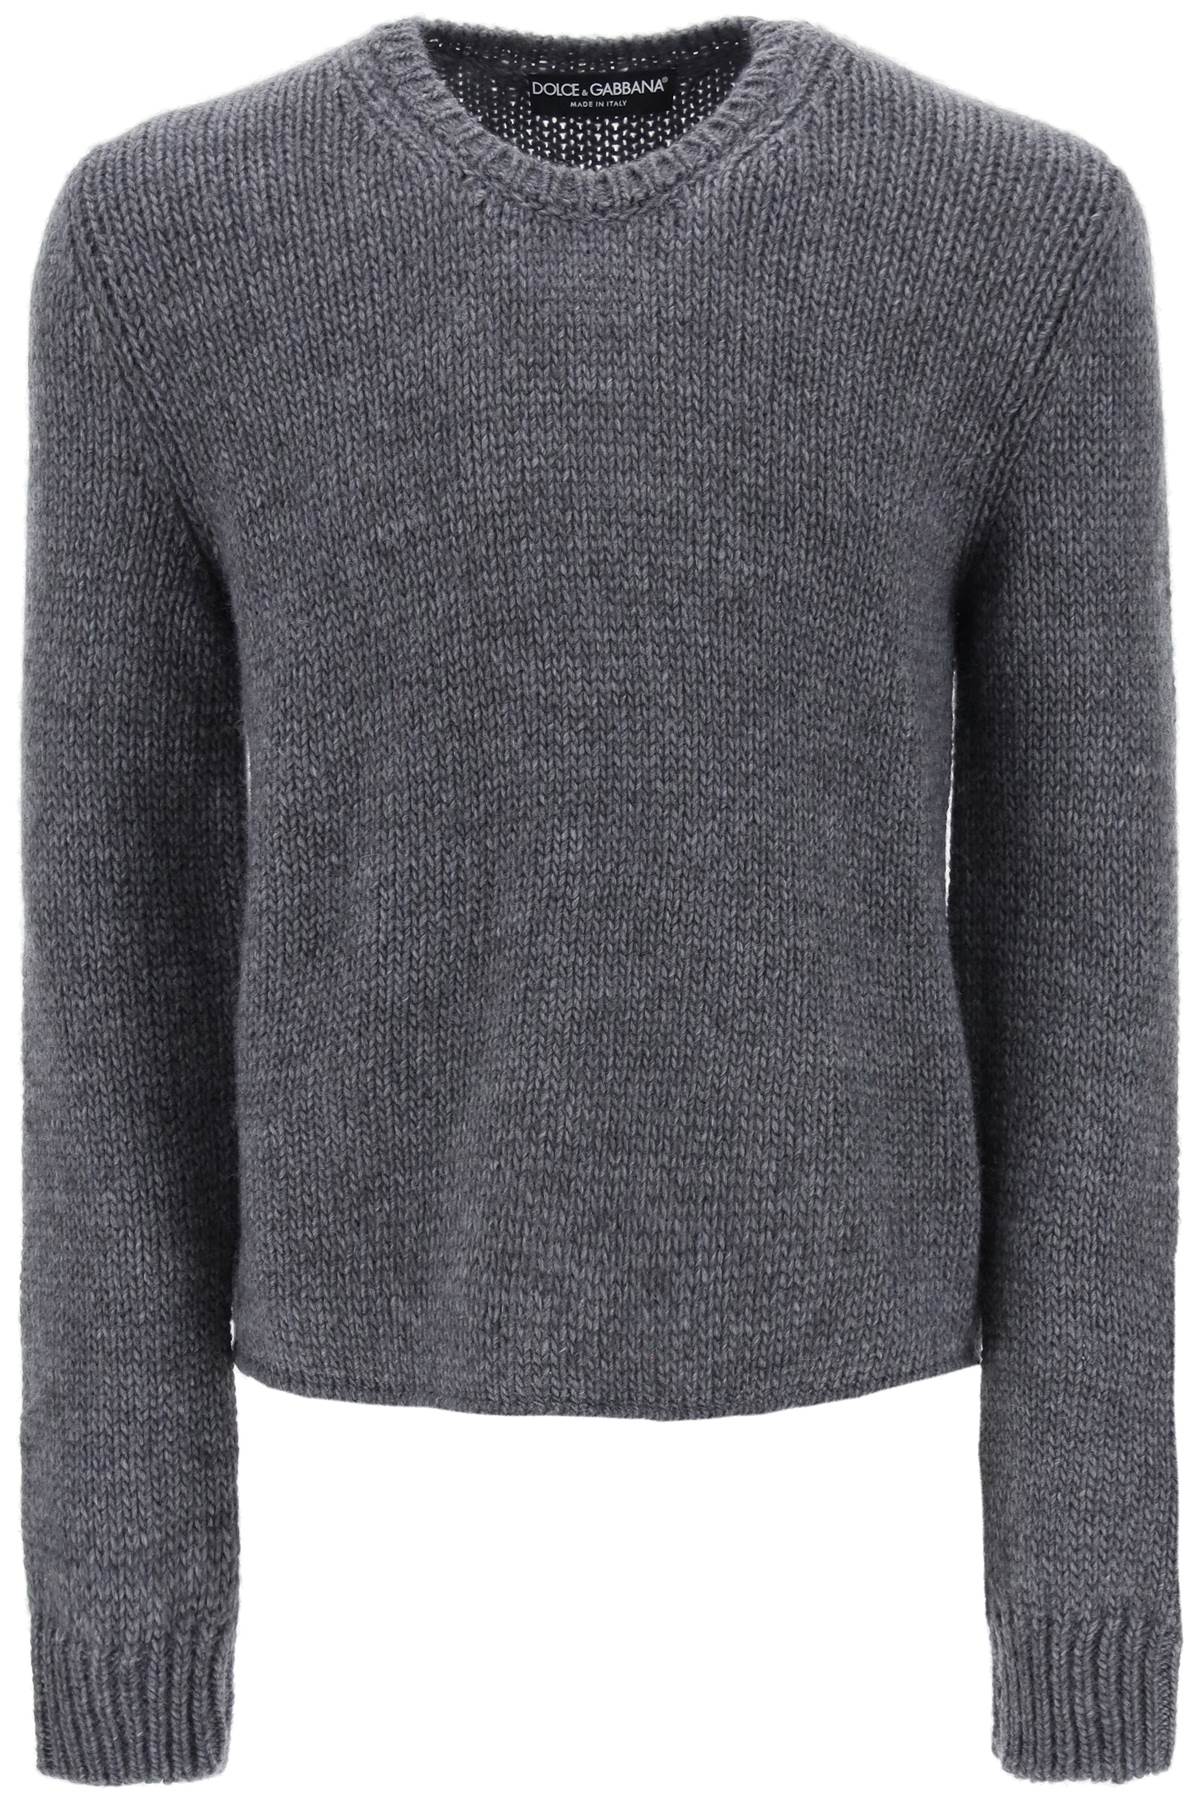 Dolce & gabbana wool and alpaca sweater-0